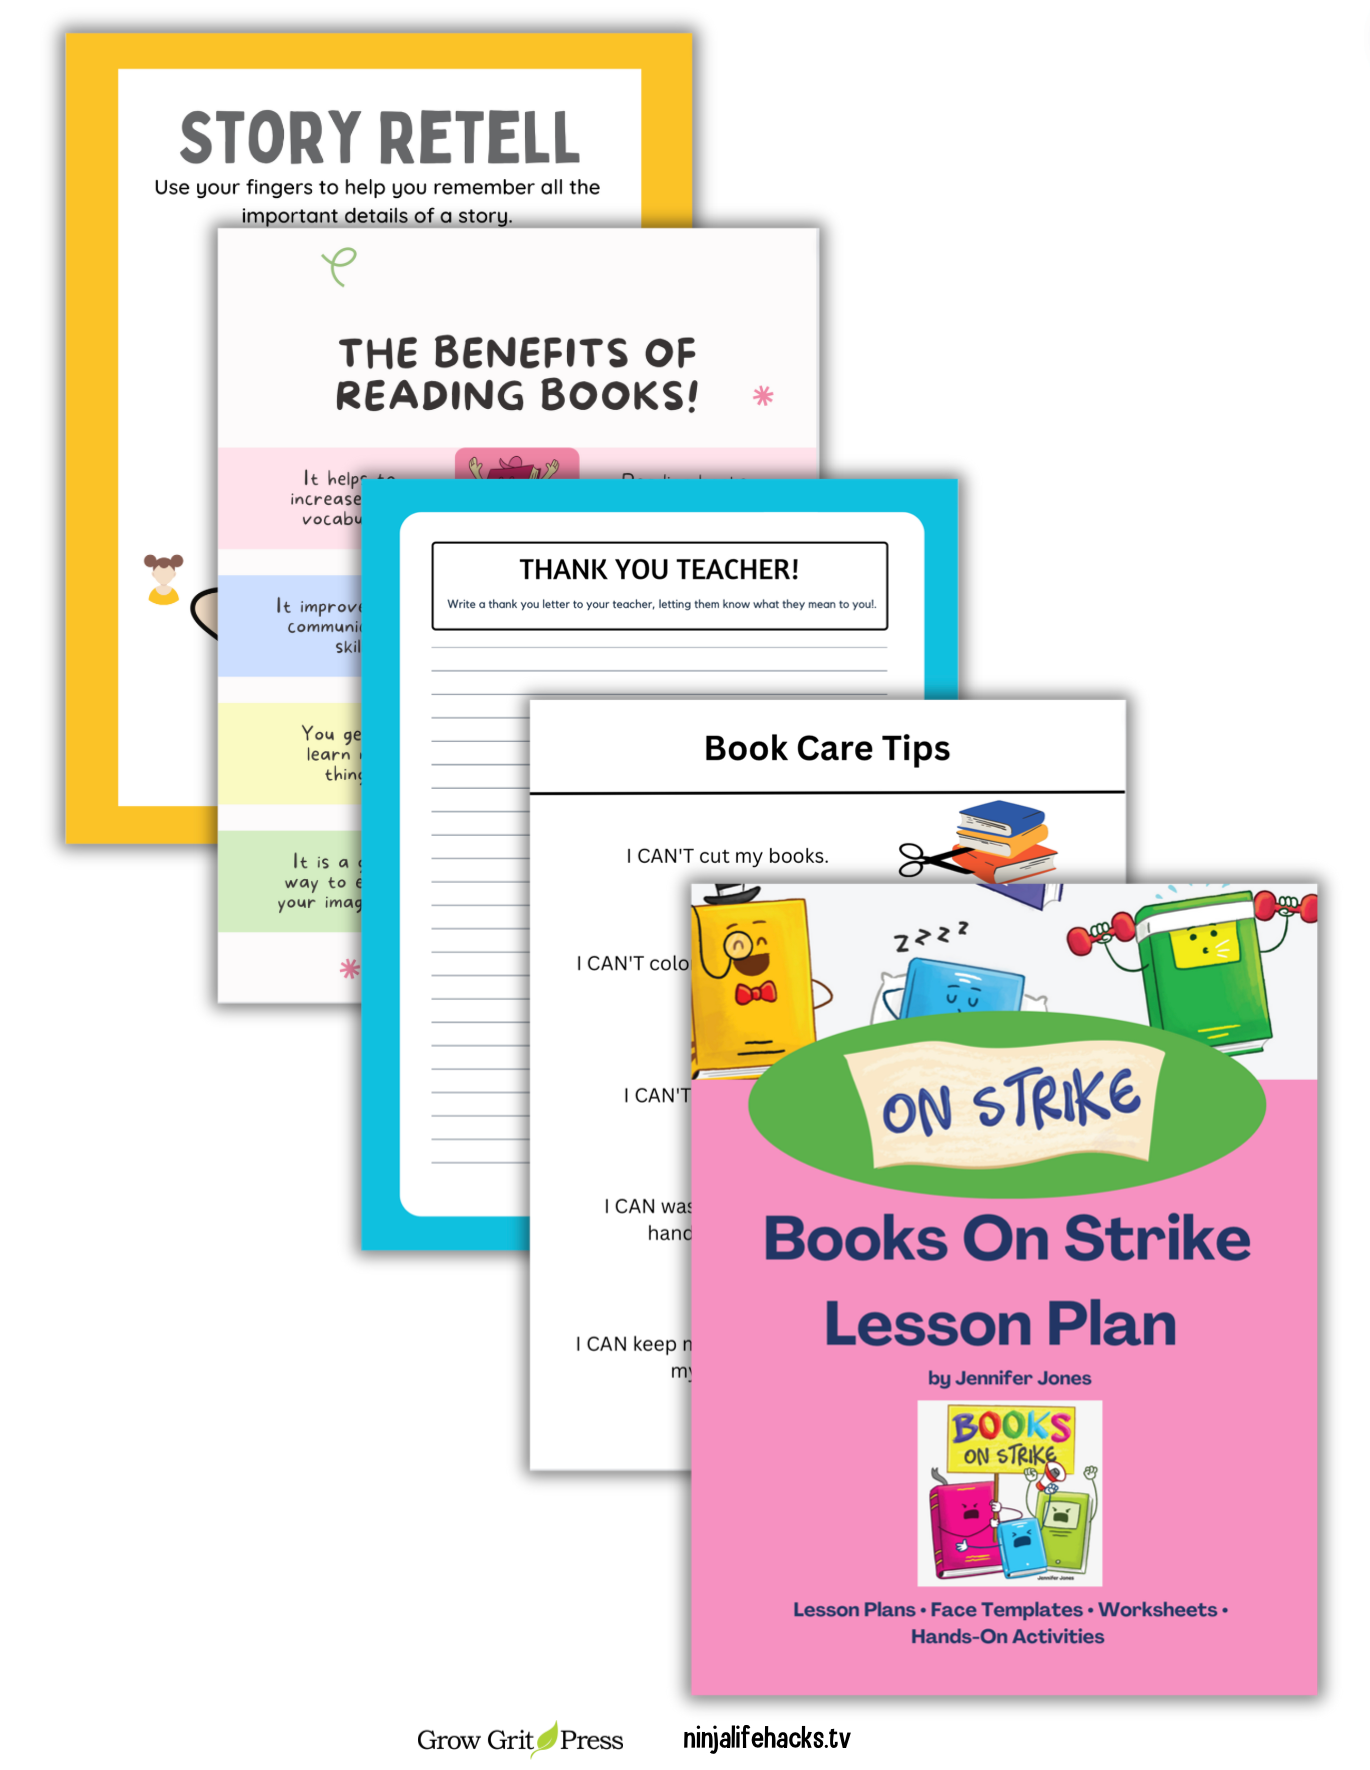 Books On Strike Lesson Plan